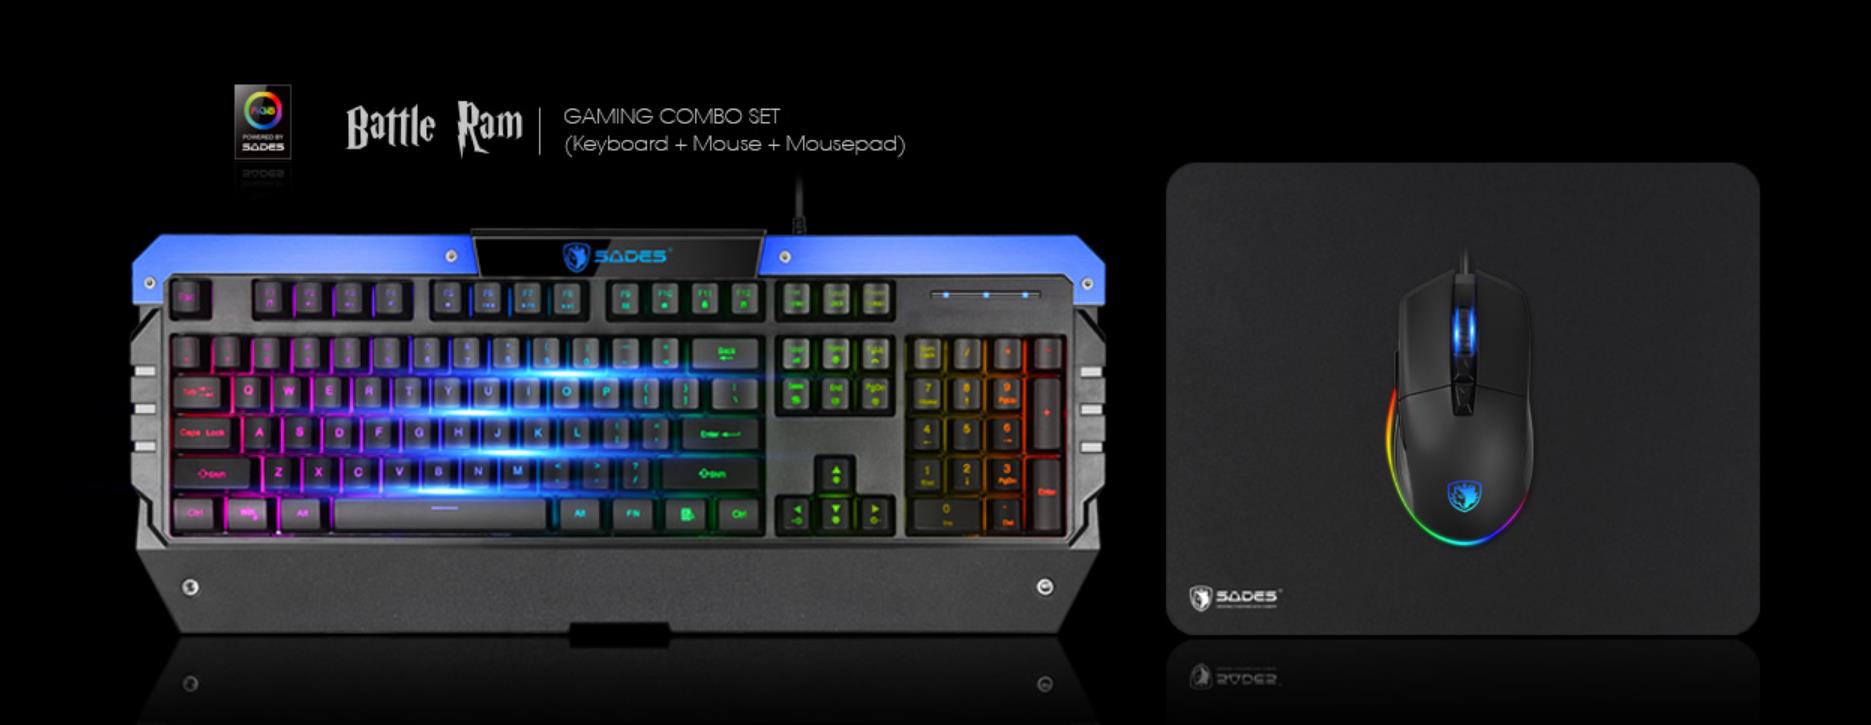 Sades Battle Ram Keyboard & Mouse Combo Review